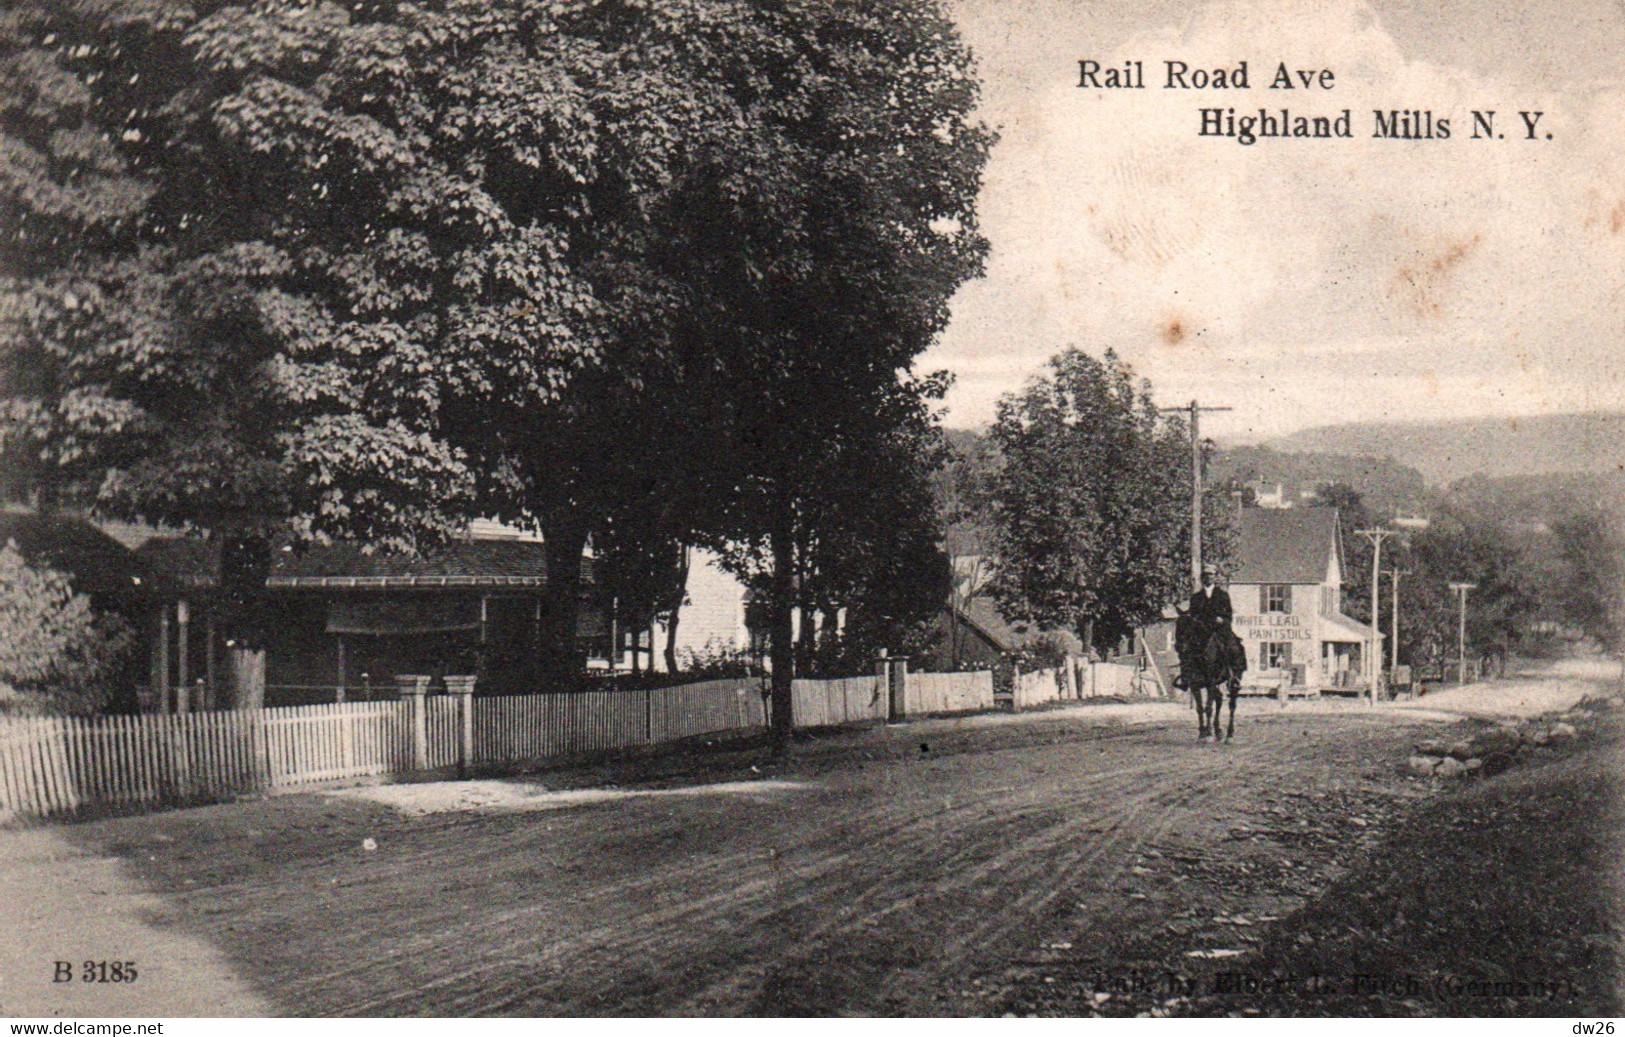 Rail Road Avenue - Highland Mills, New York - Card Not Circulated B 3185 - Brooklyn